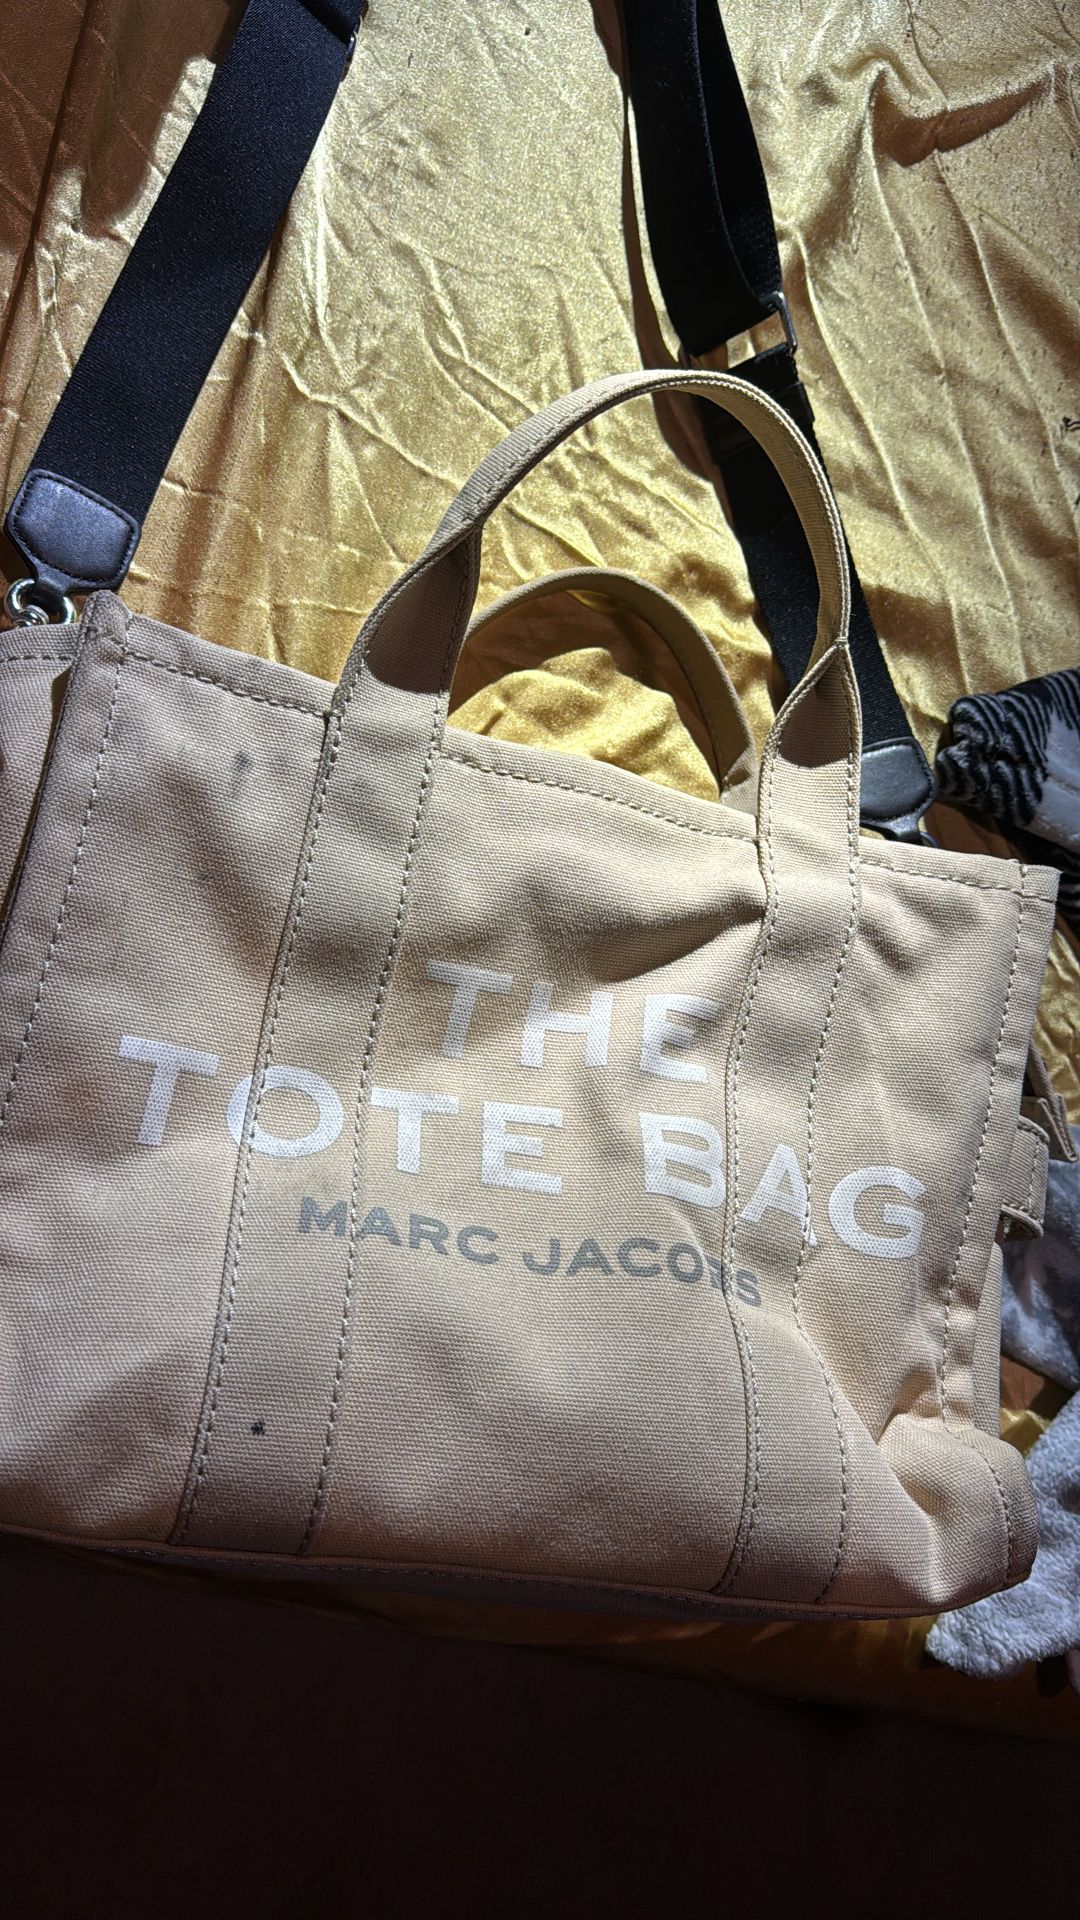 The Tote Bag